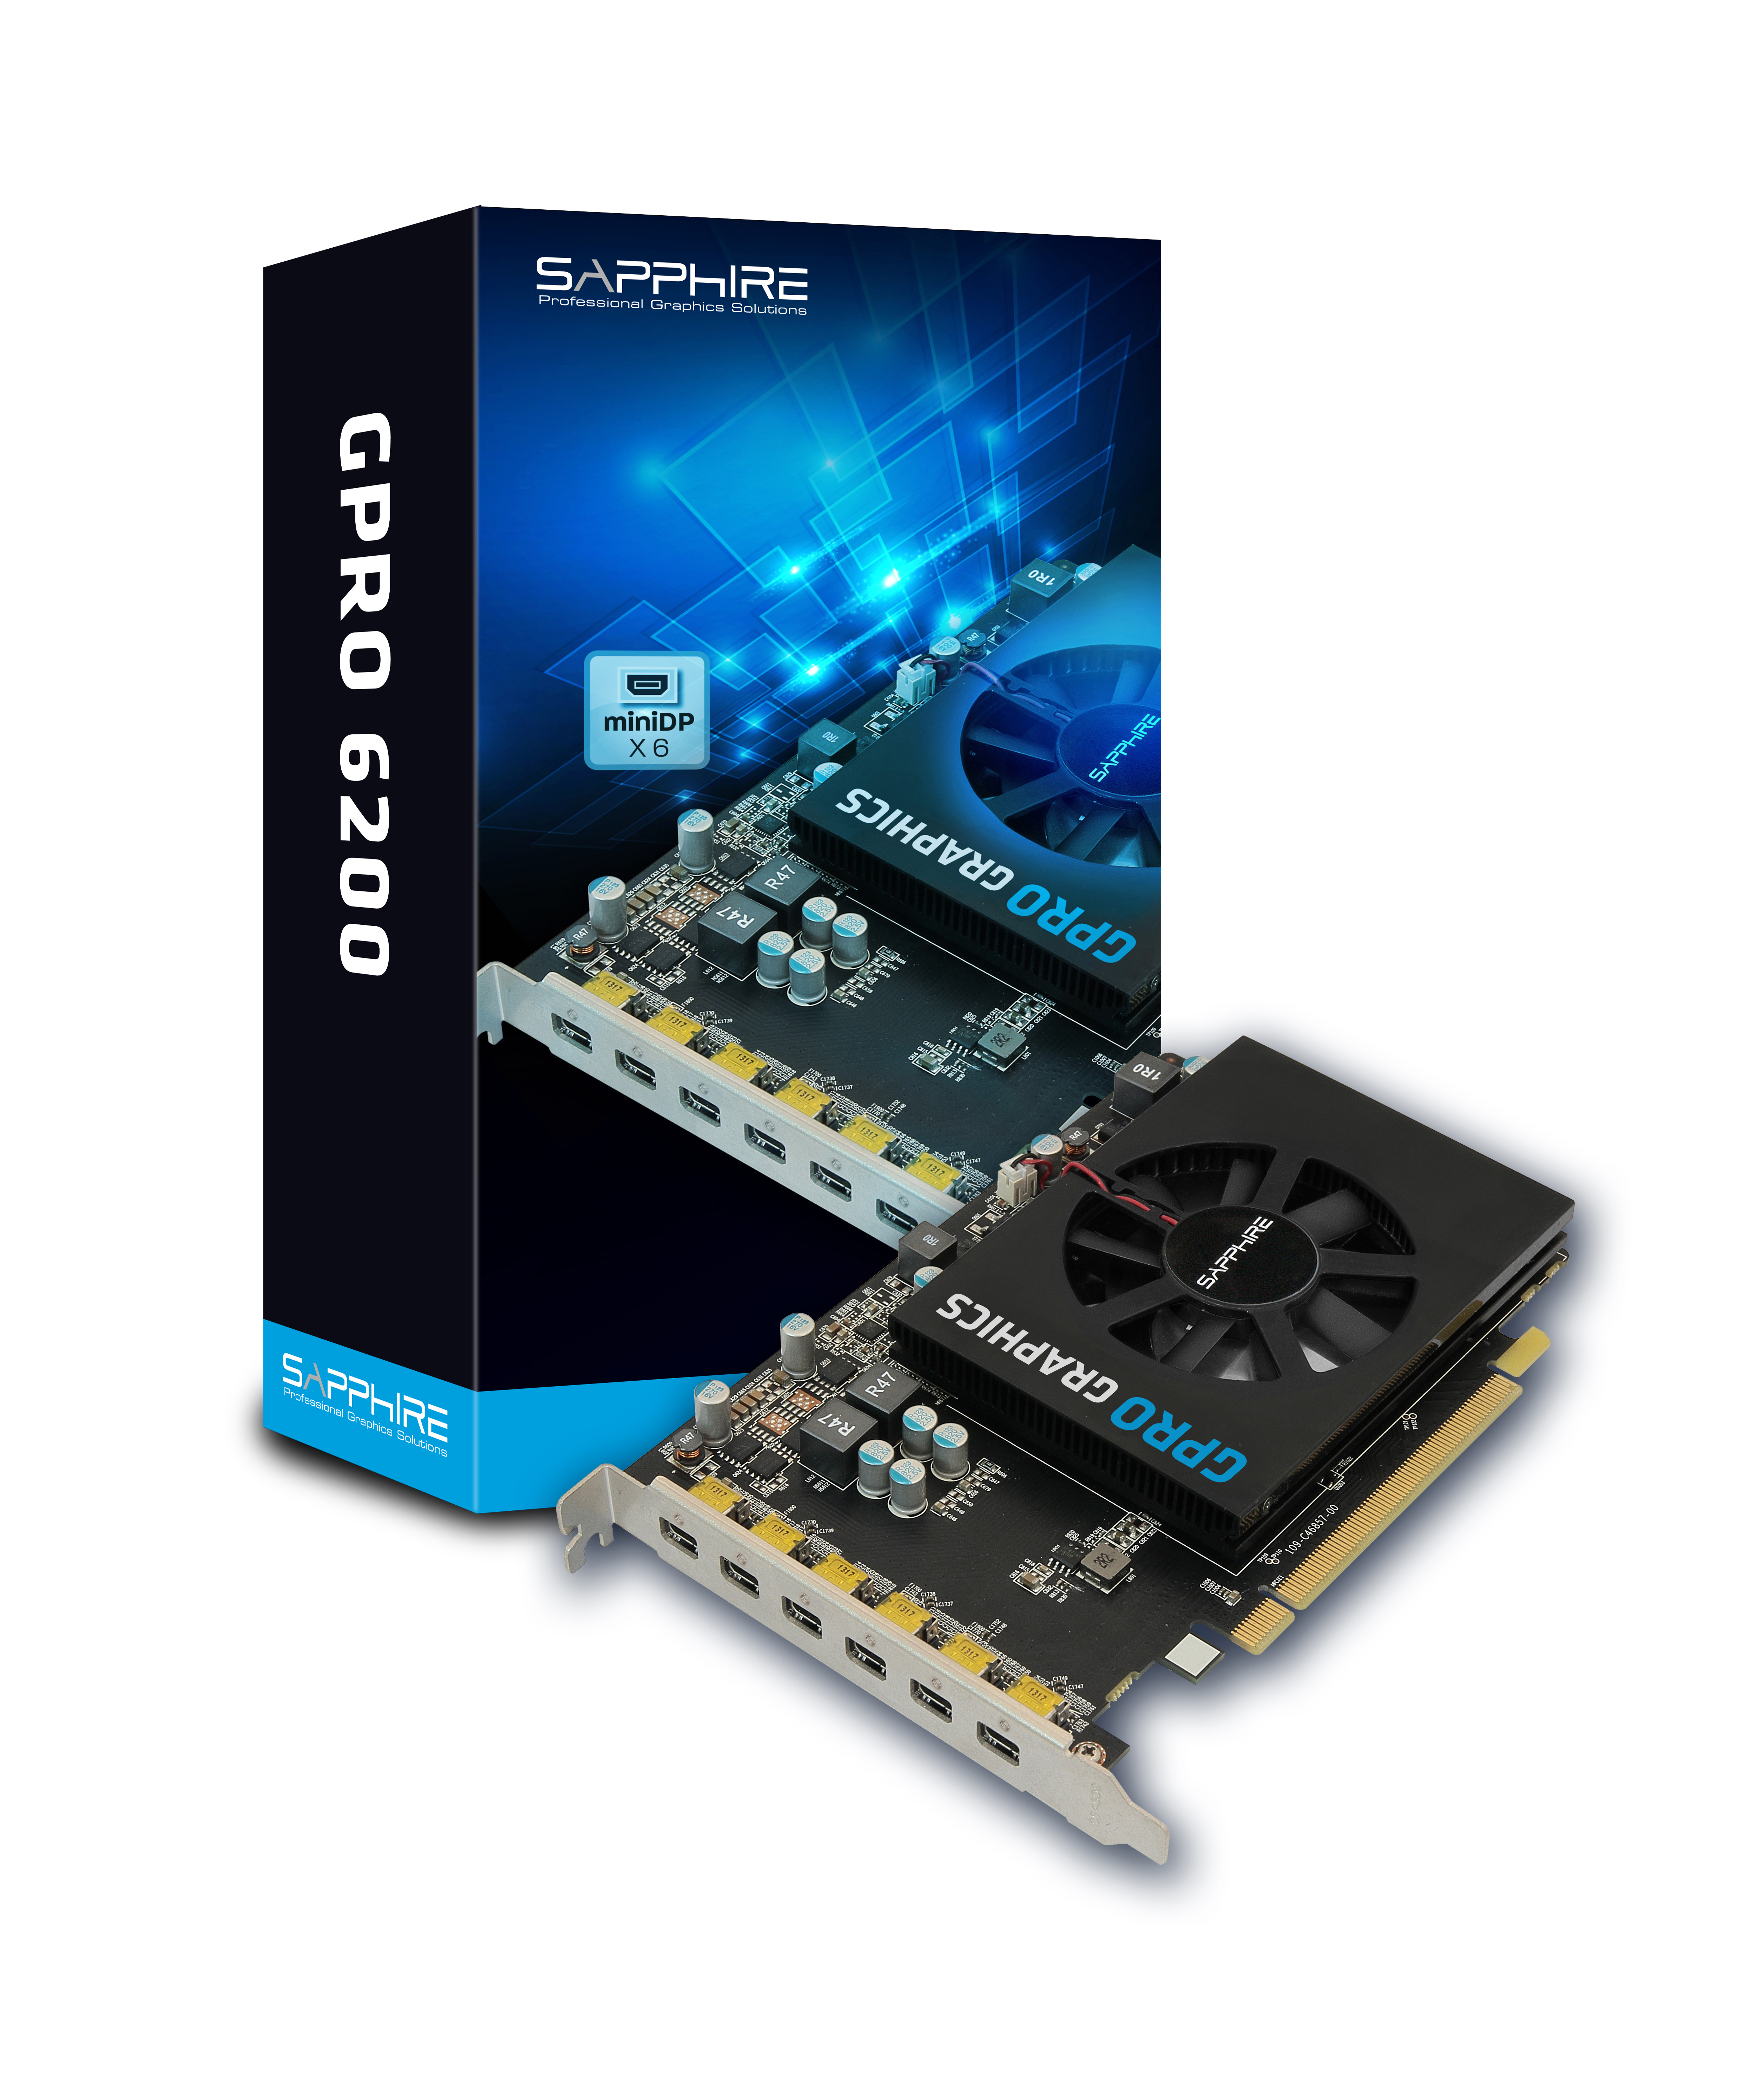 SAPPHIRE GPRO 6200 4GB (32258-00-21G) Grafikkarte) (AMD